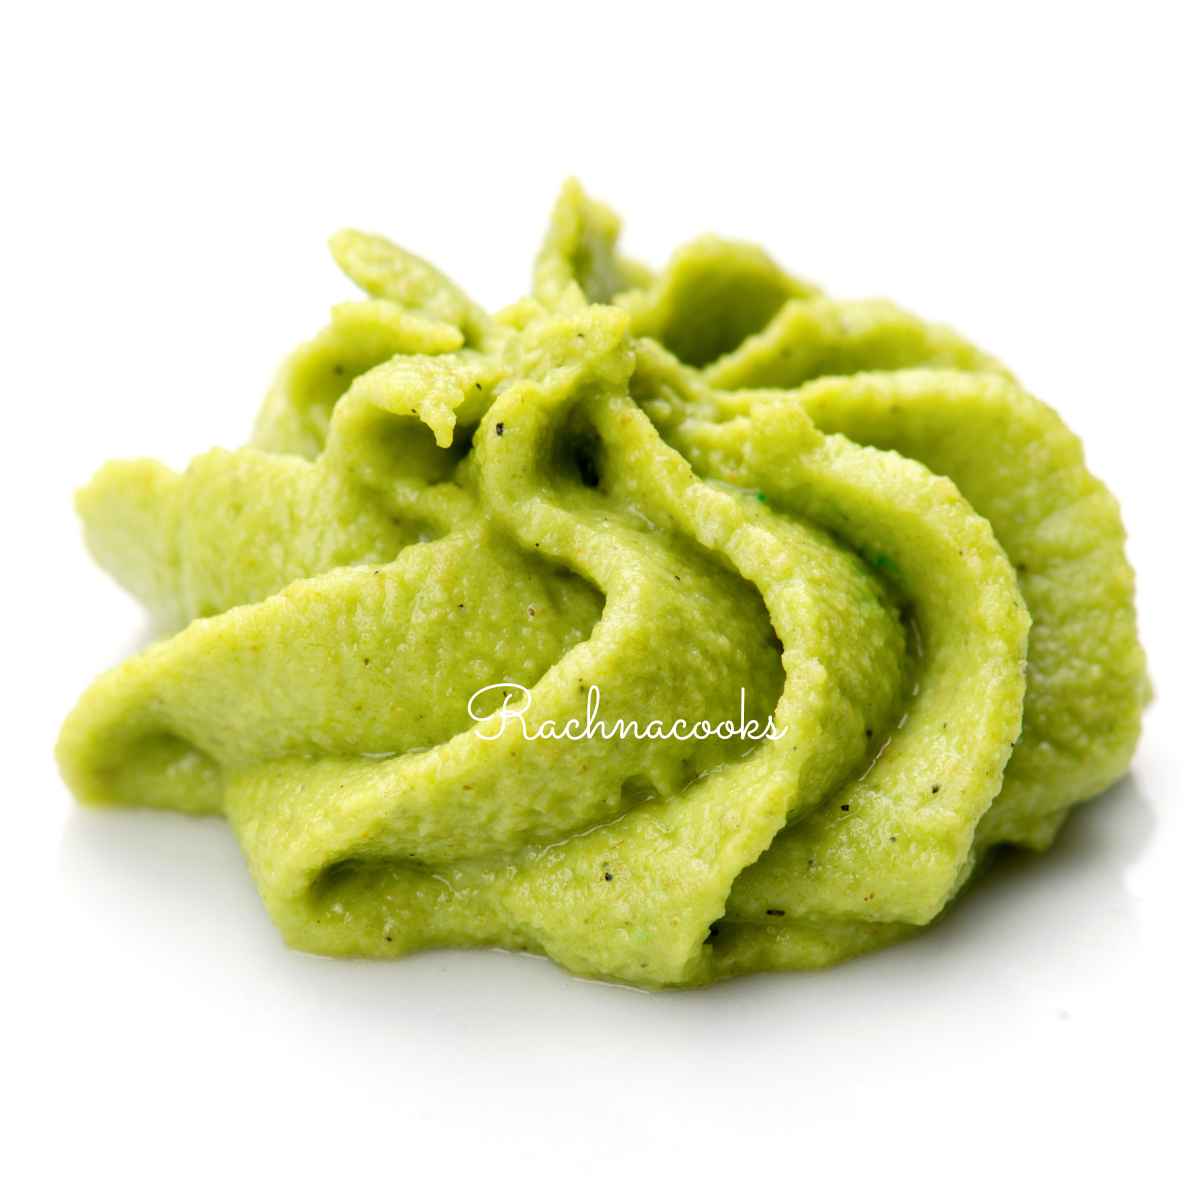 Green wasabi paste in focus